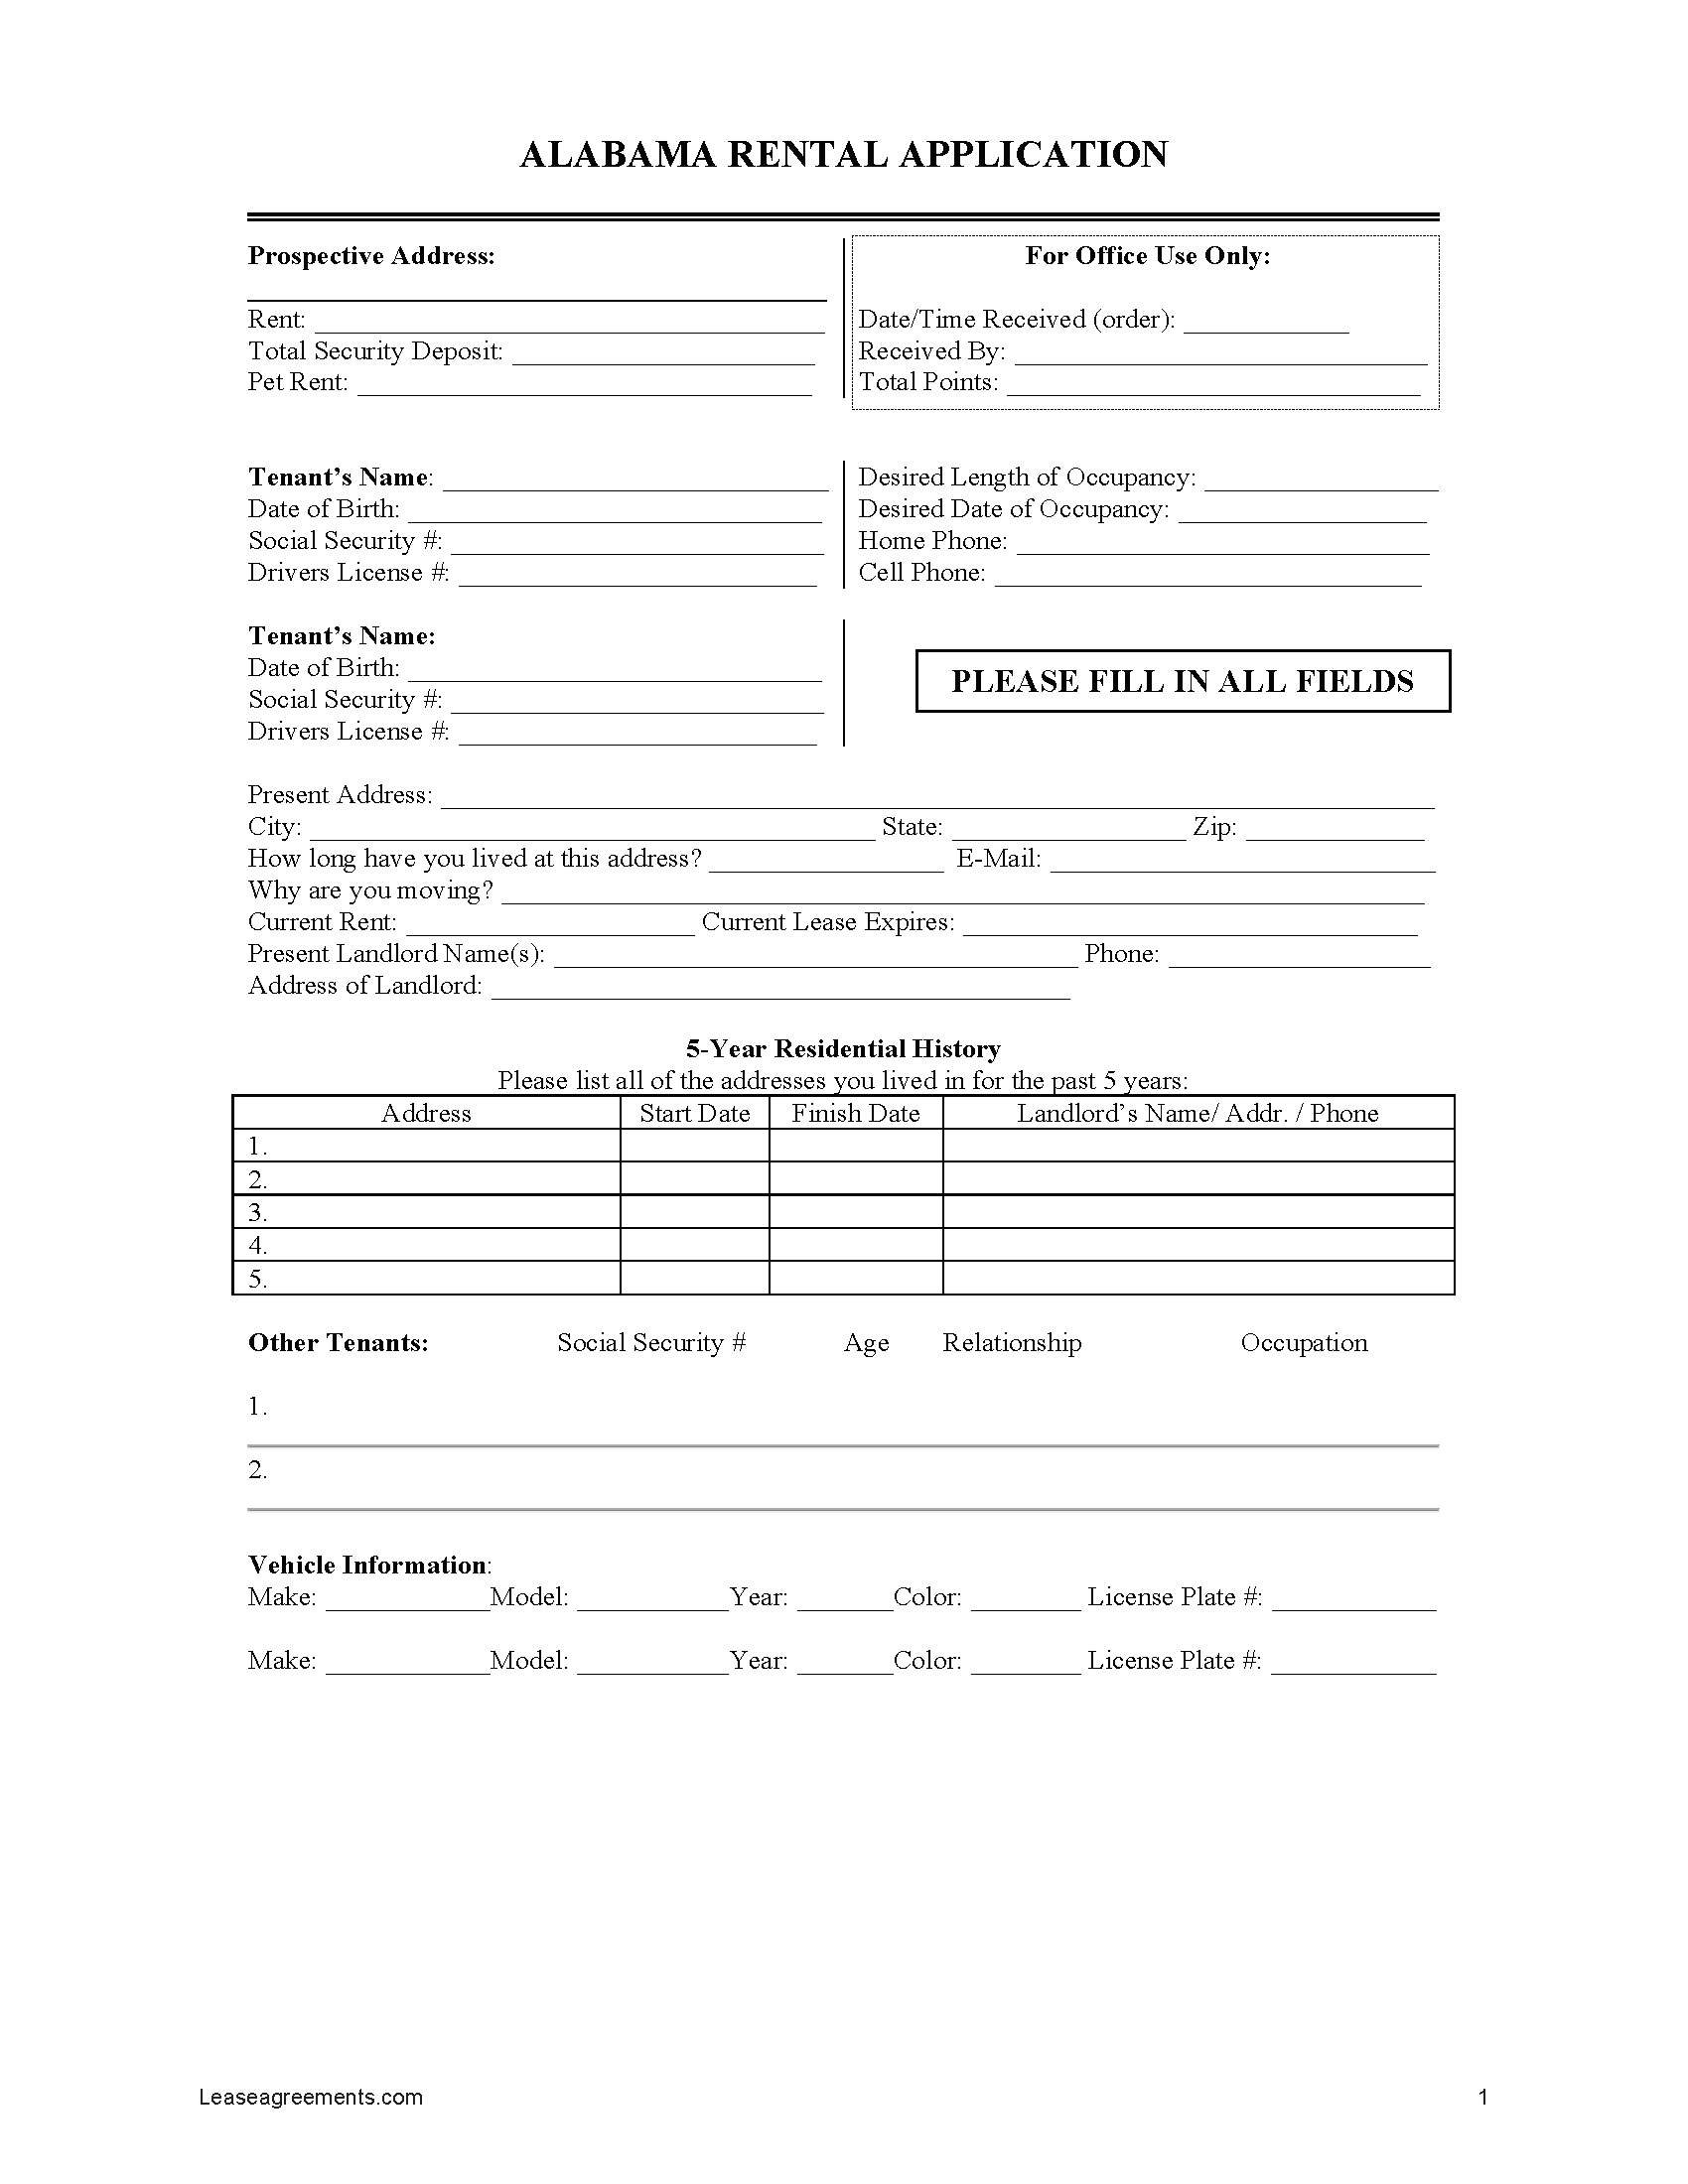 Free Alabama Rental Application Form Pdf 6467